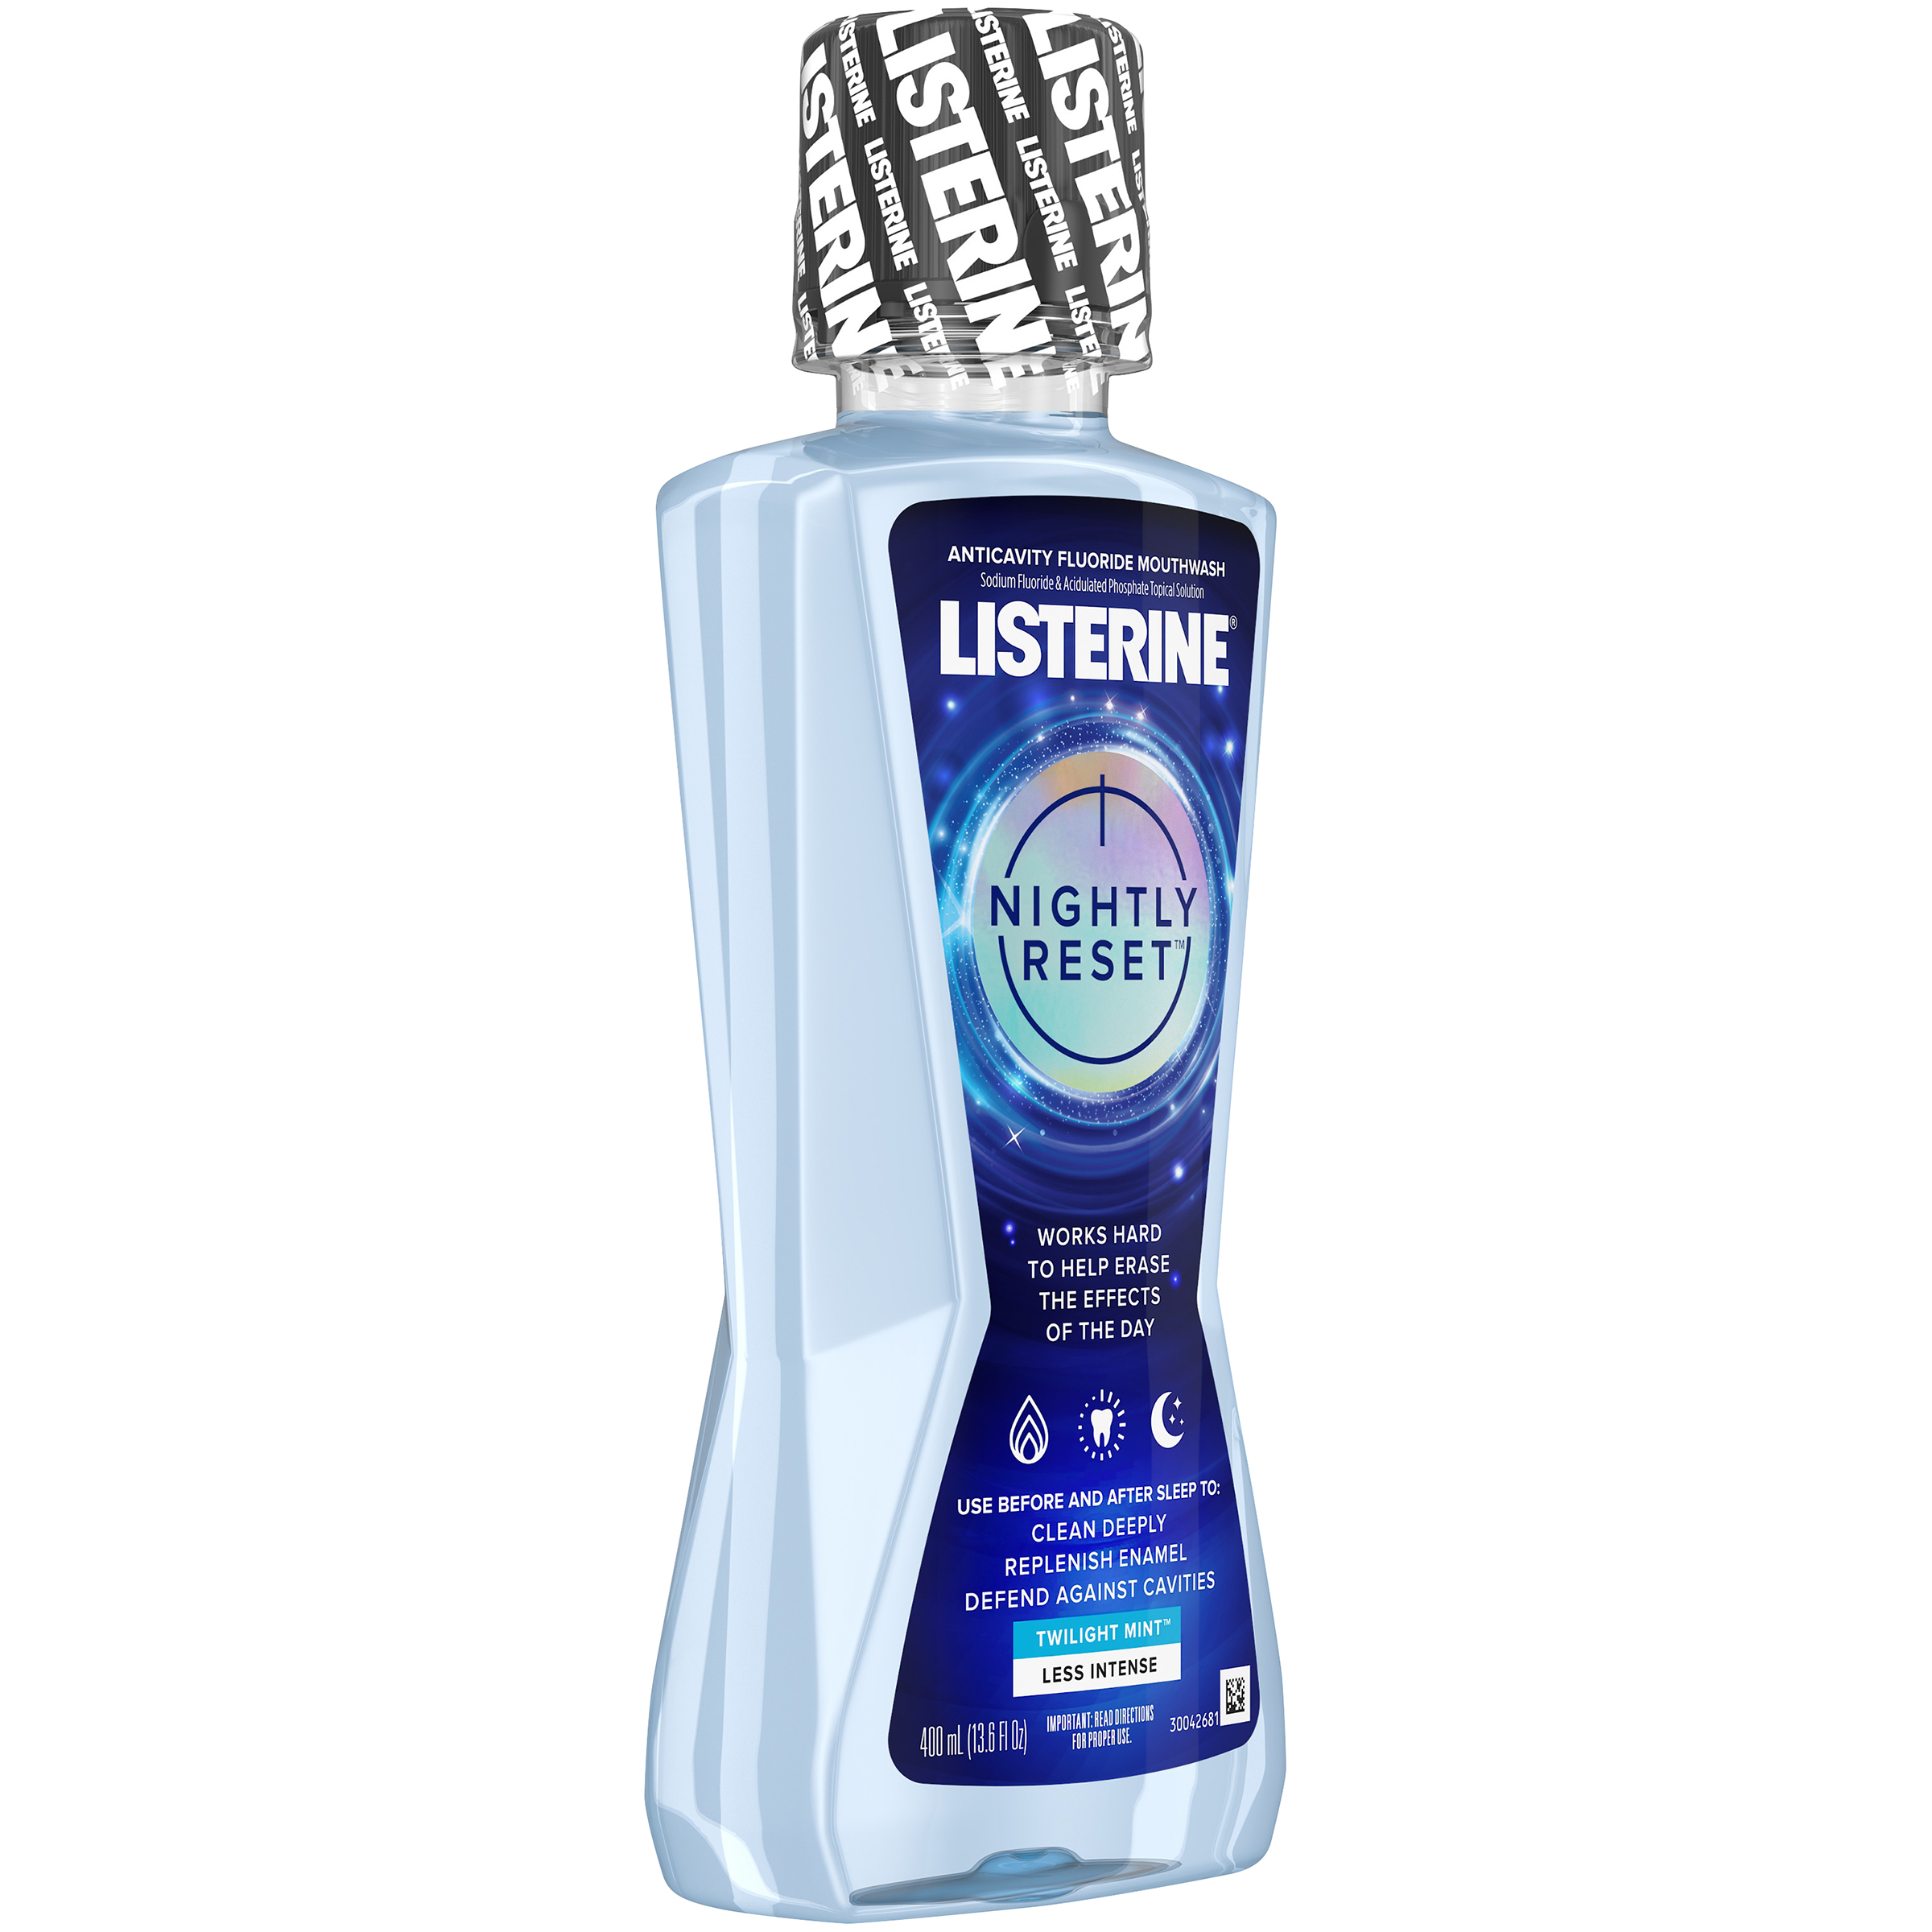 Listerine Nightly Reset Nighttime Mouthwash, Twilight Mint, 400 ml